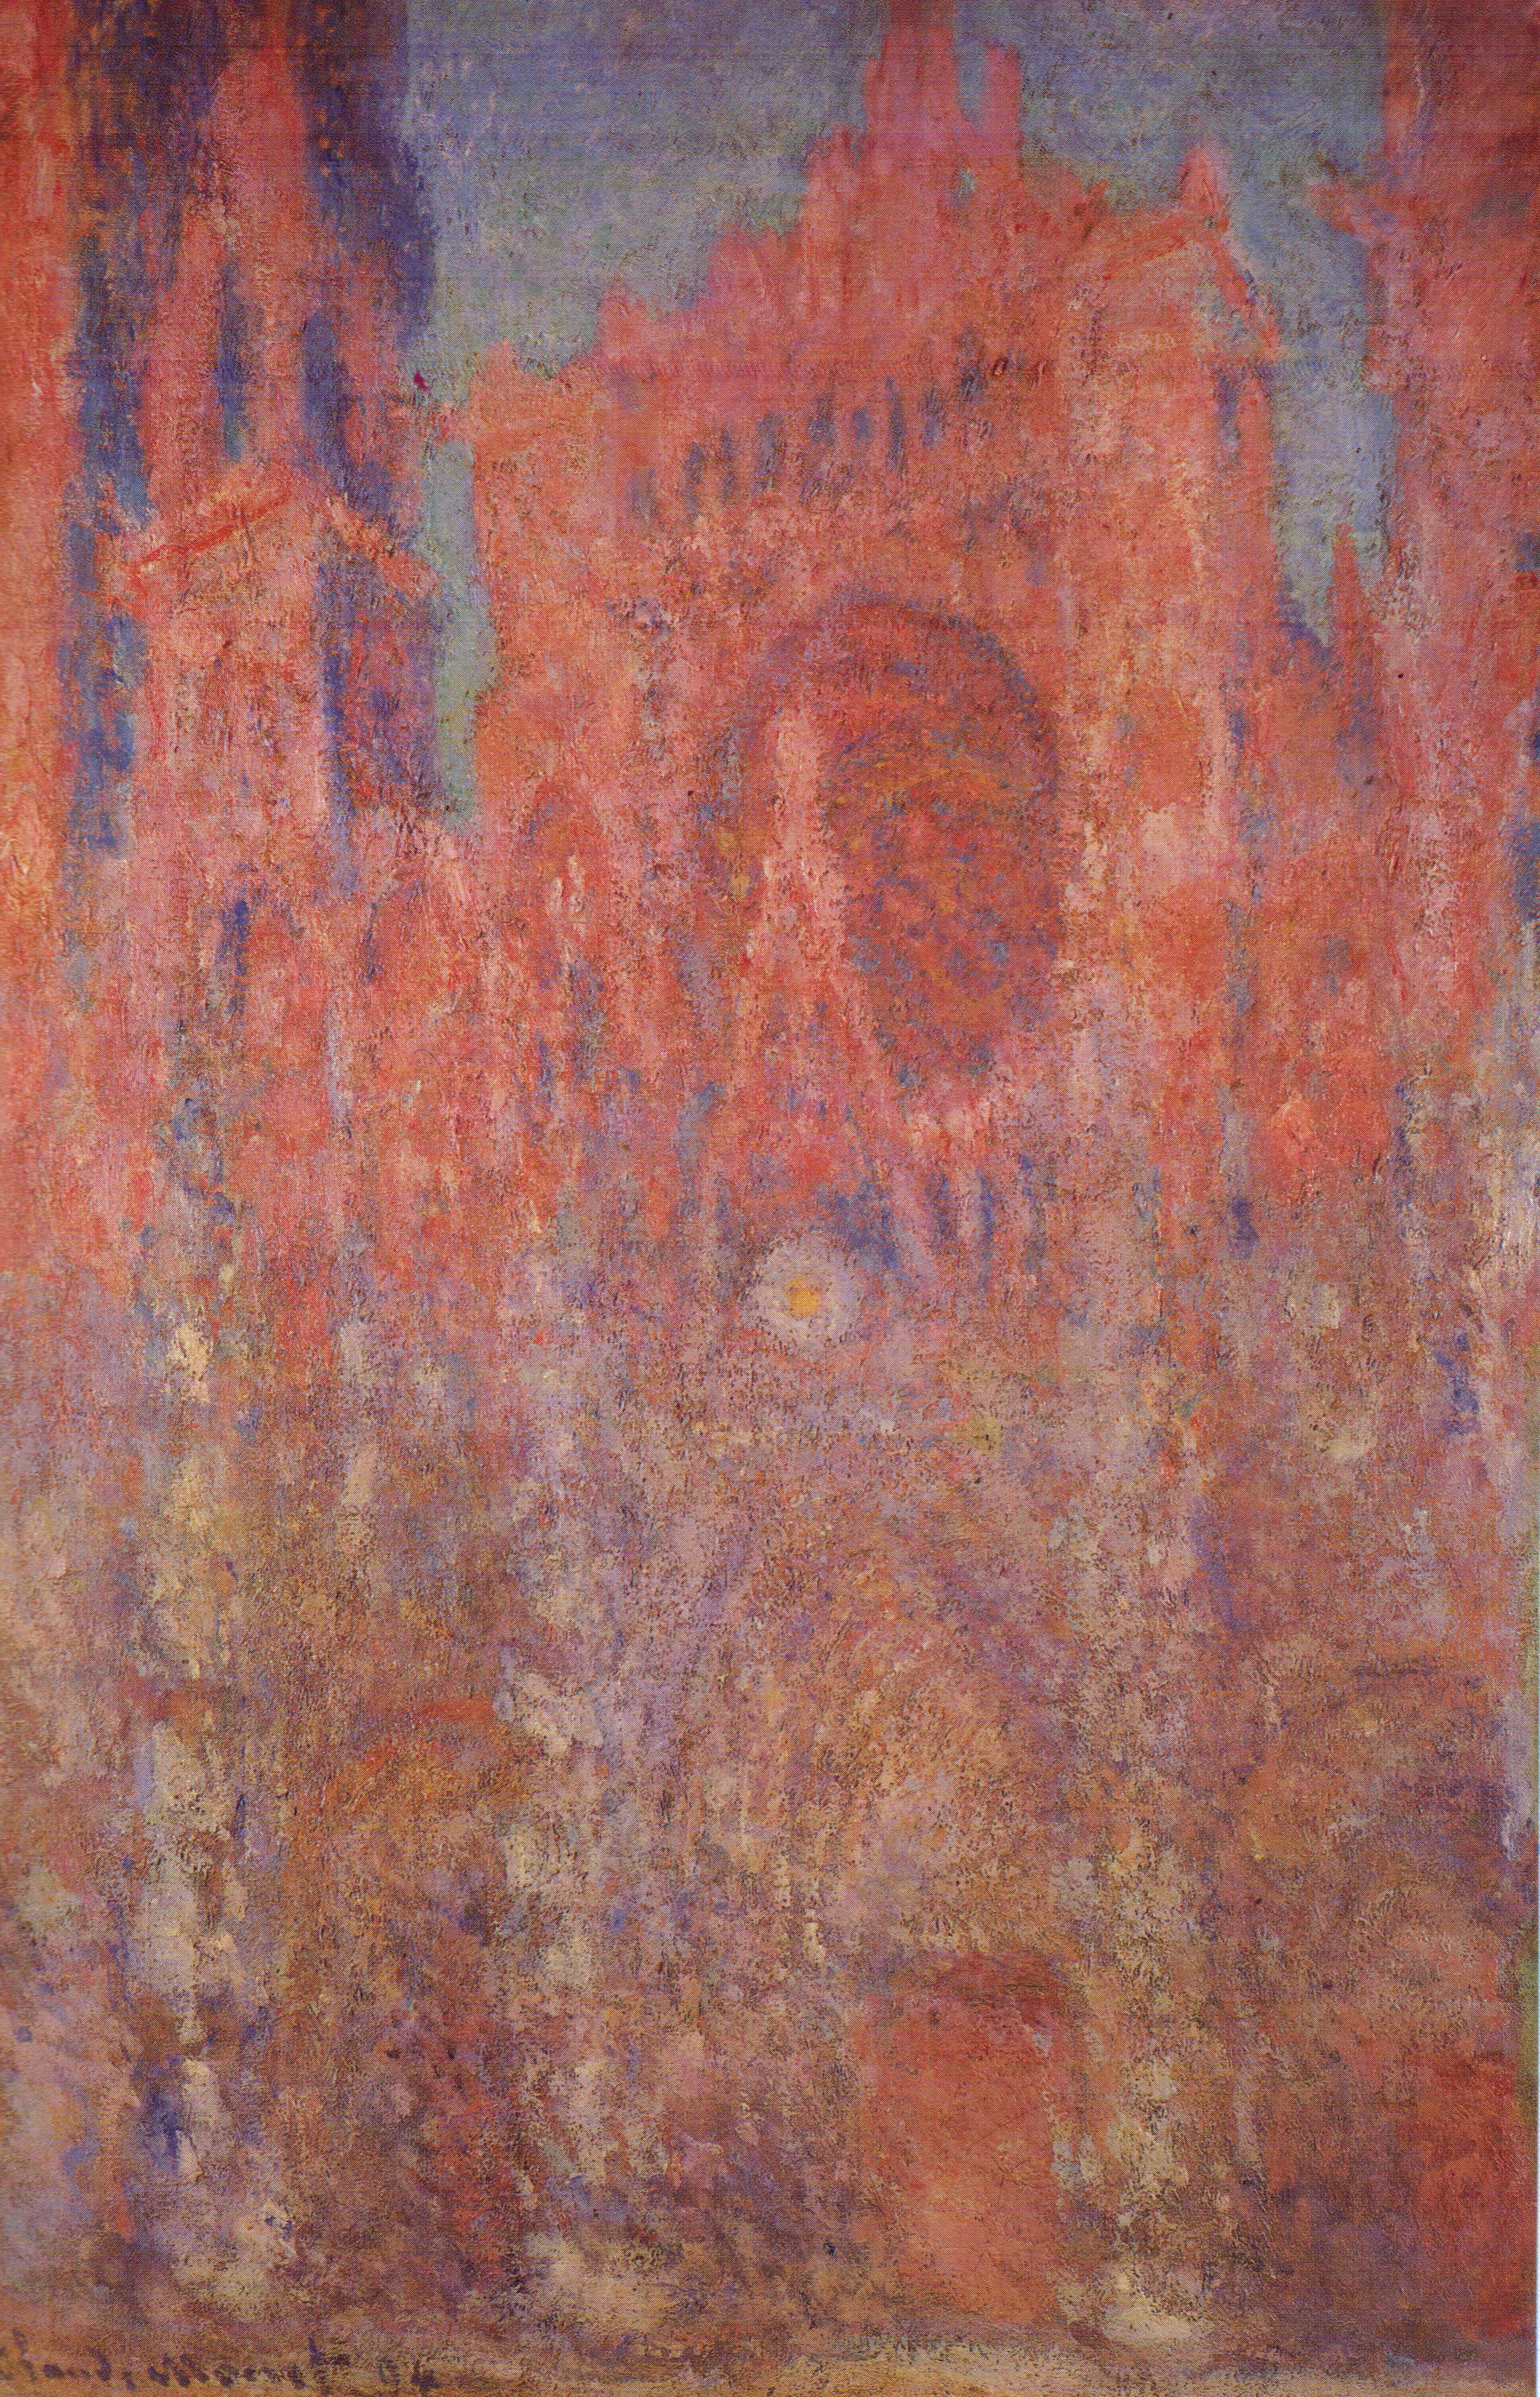 https://upload.wikimedia.org/wikipedia/commons/3/3b/Claude_Monet_-_Rouen_Cathedral%2C_Facade_I.jpg